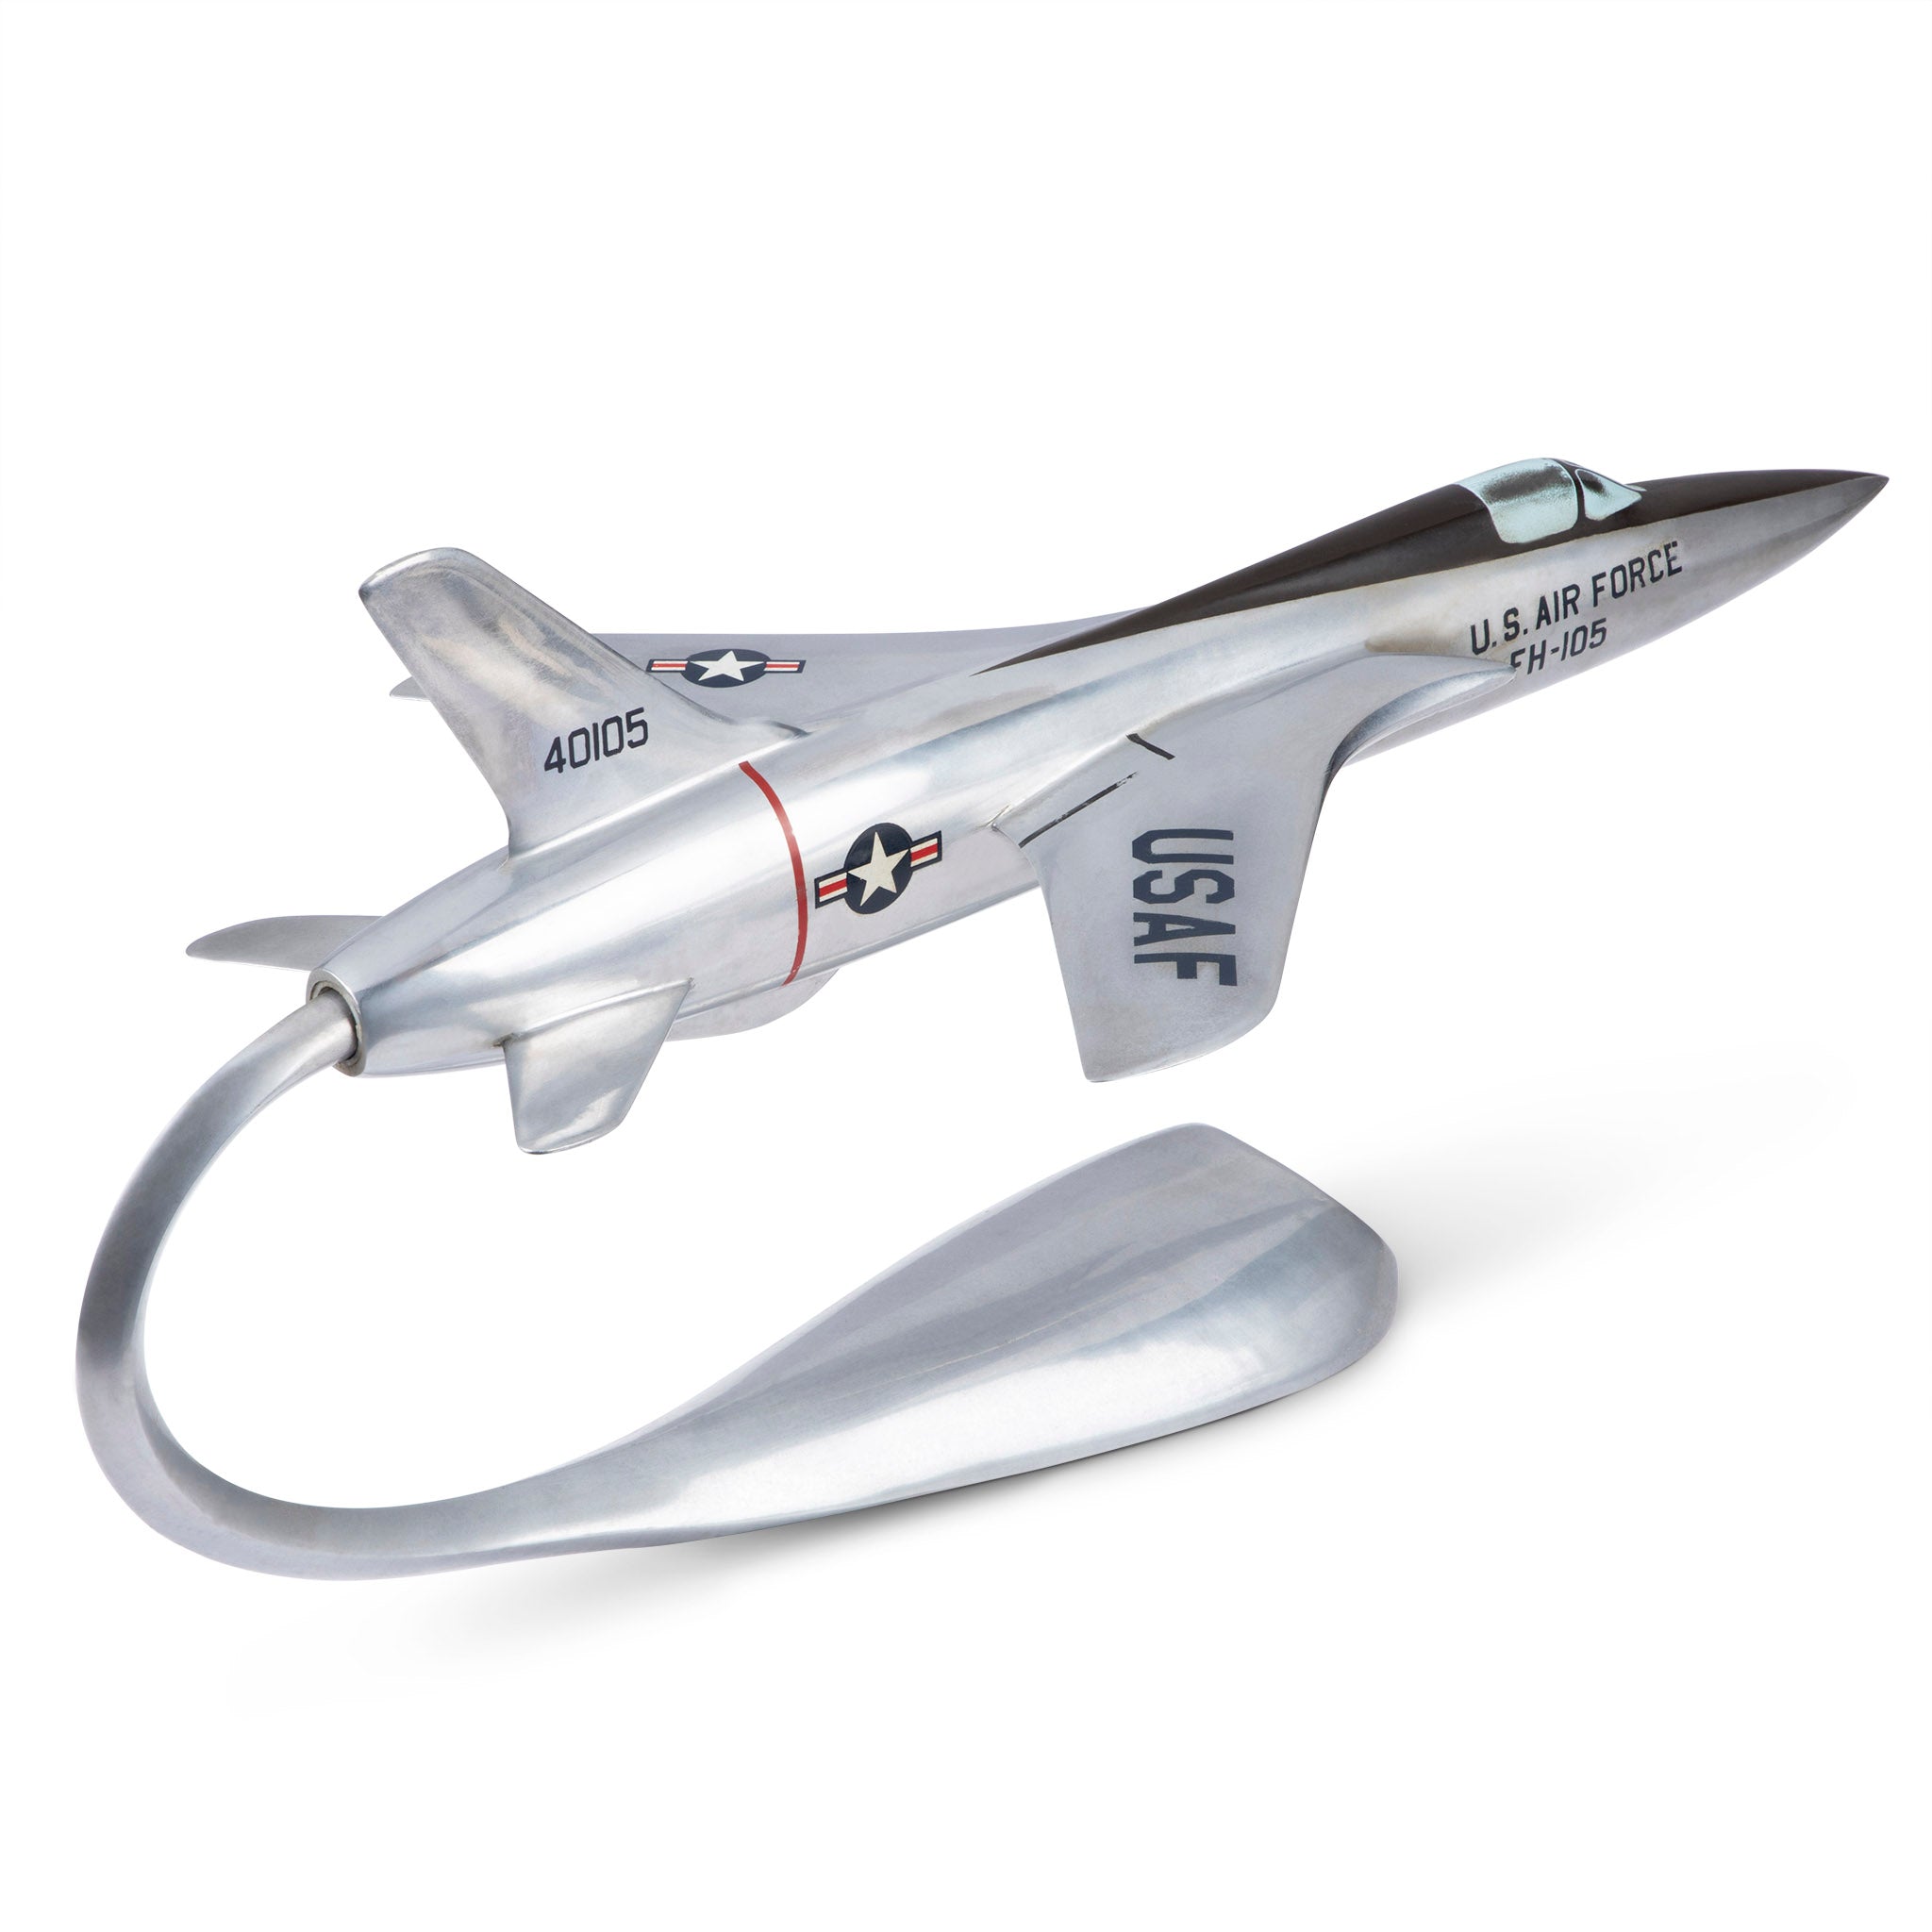 Republic F-105 Thunderchief Supersonic Fighter Bomber Desk Model